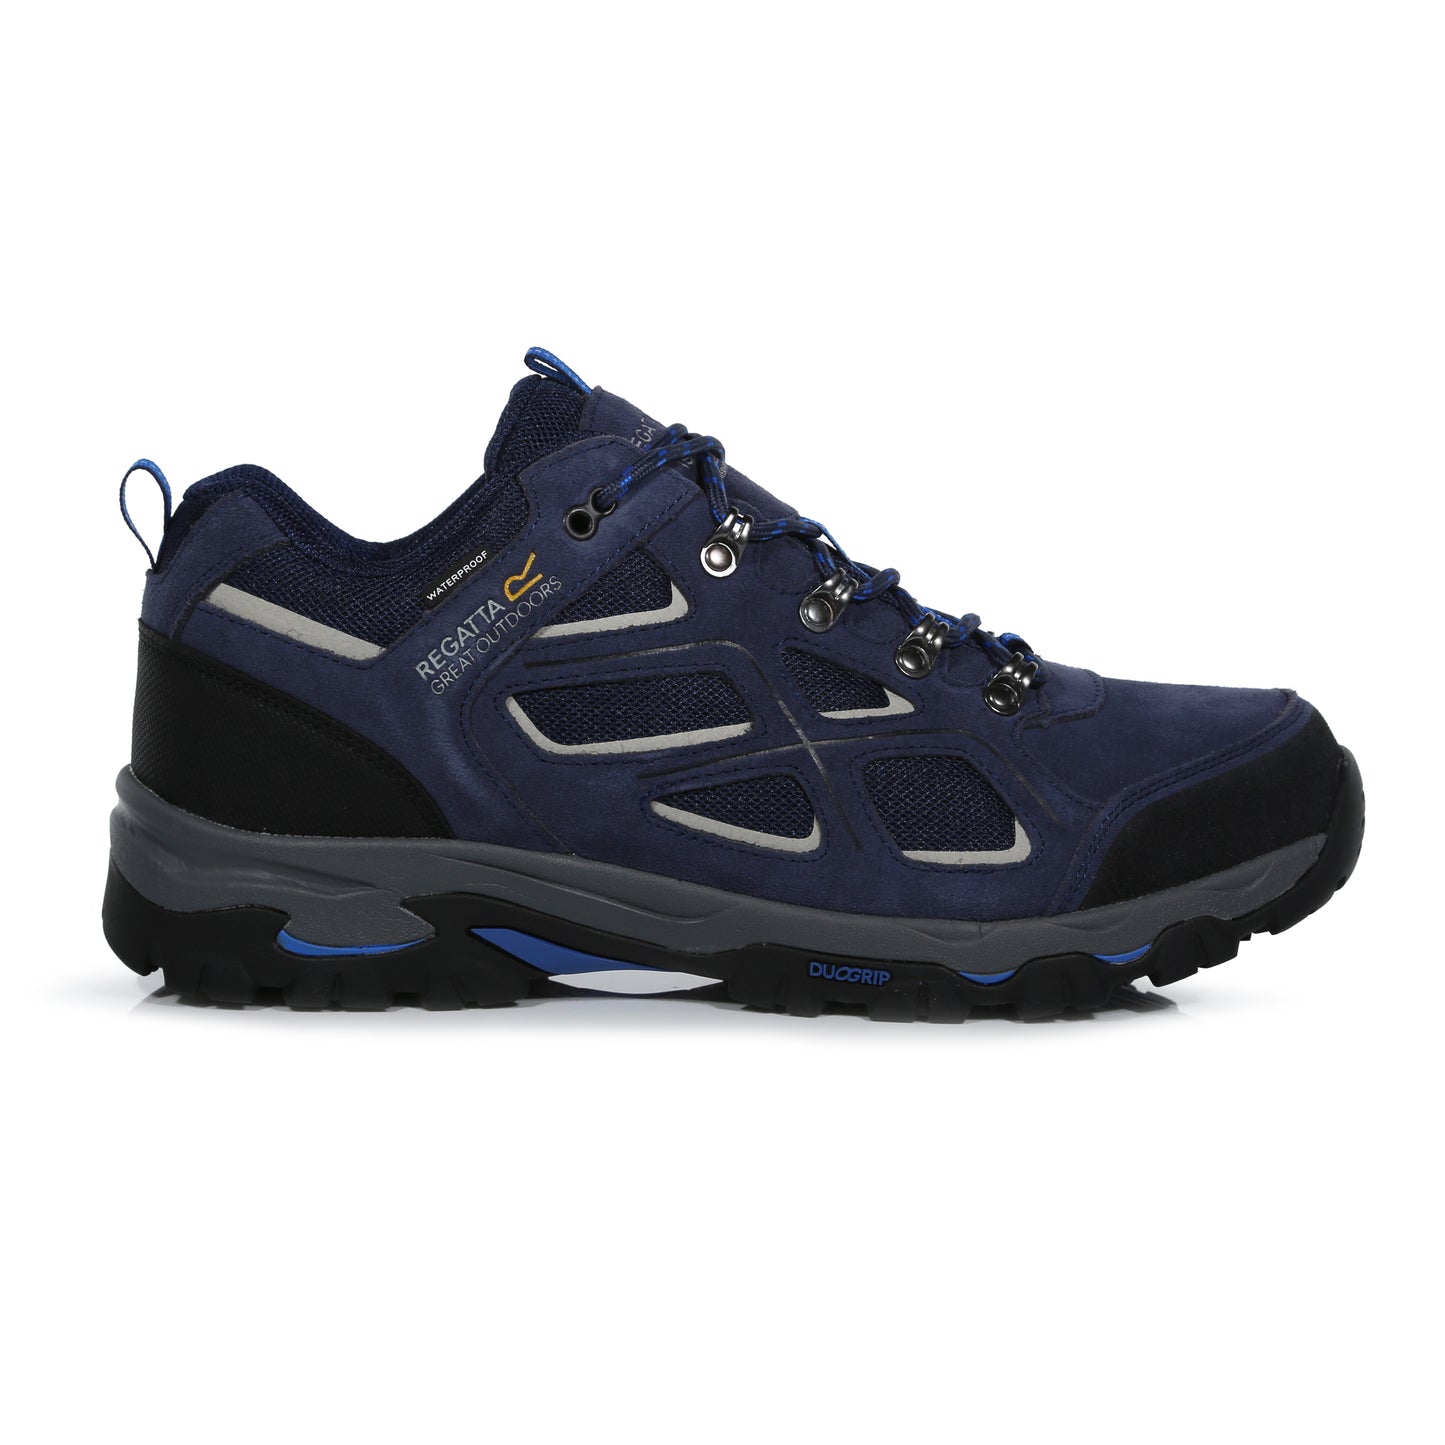 Tebay Waterproof Low Walking Shoes - Navy Oxford Blue